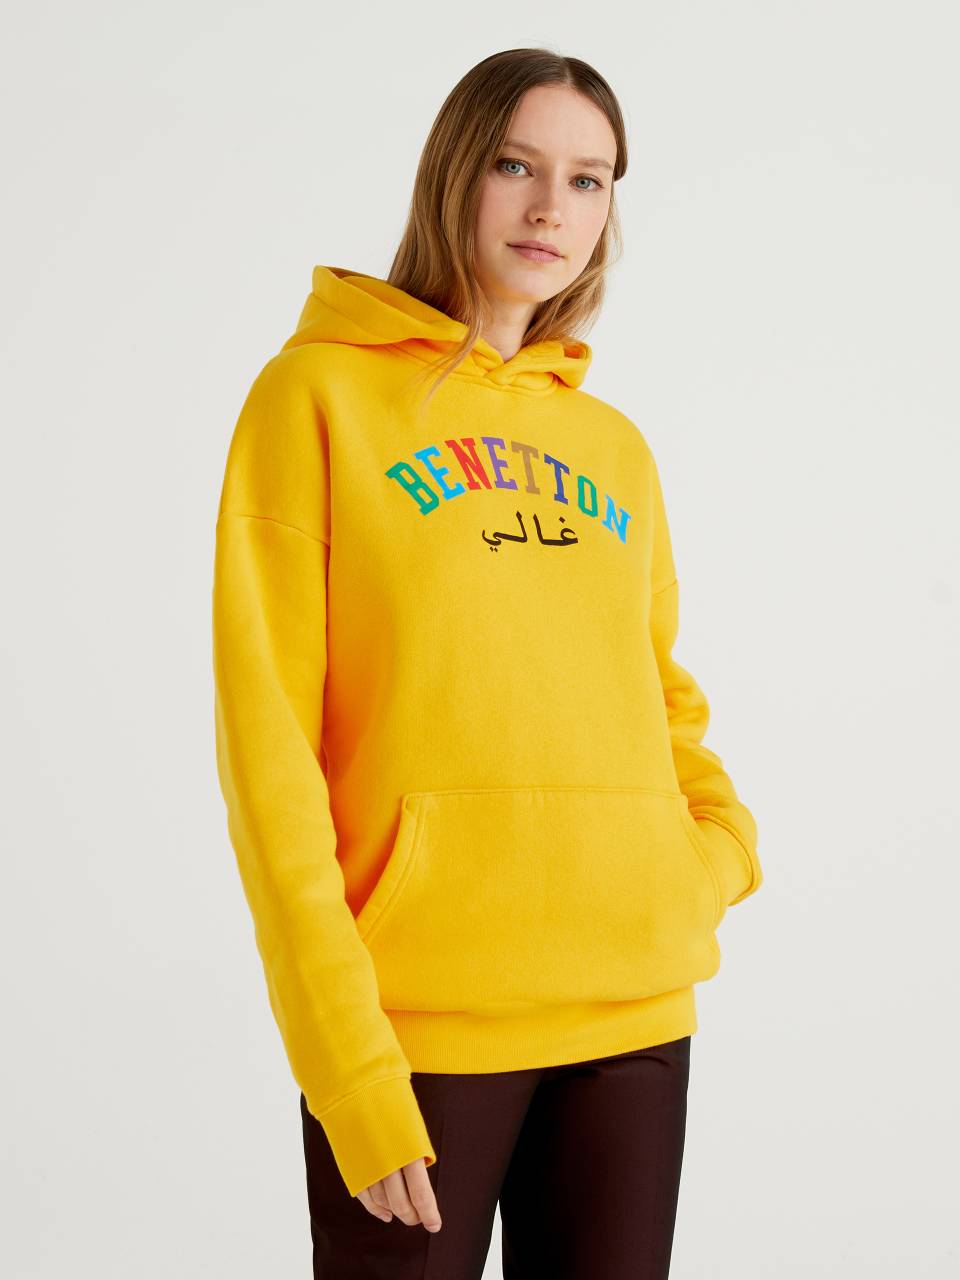 Benetton Yellow sweatshirt with hood and print by Ghali. 1